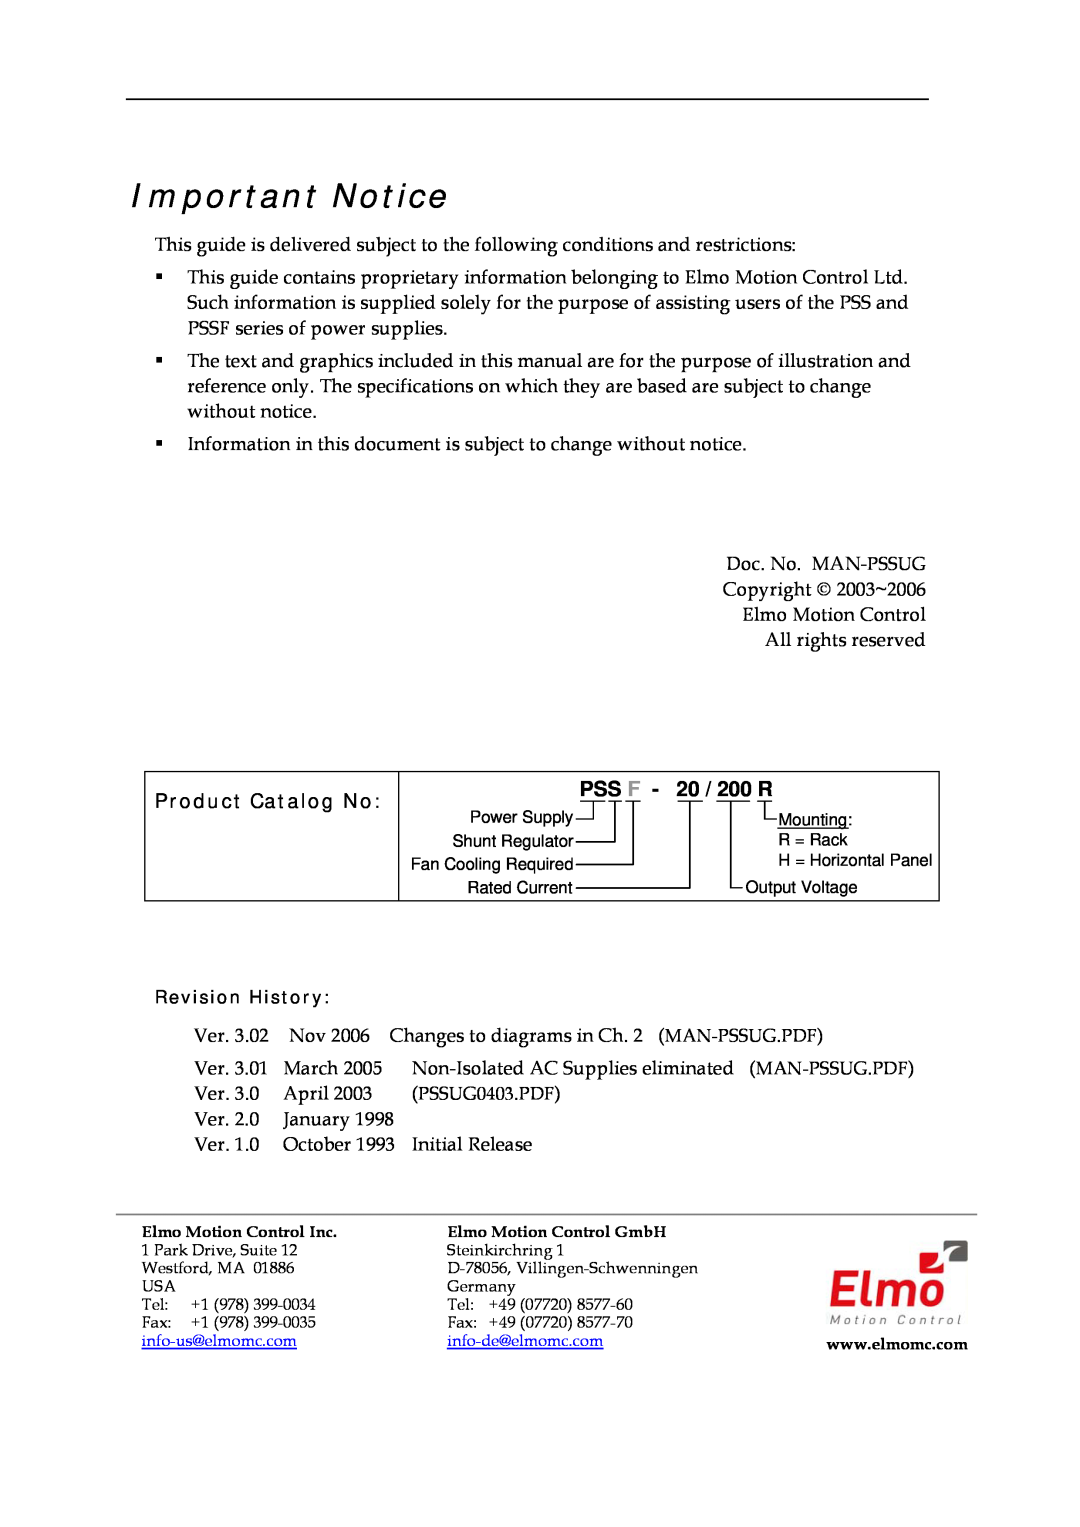 Elmo PSS 3U, PSS 6U manual PSS F - 20 / 200 R, Important Notice, Product Catalog No 